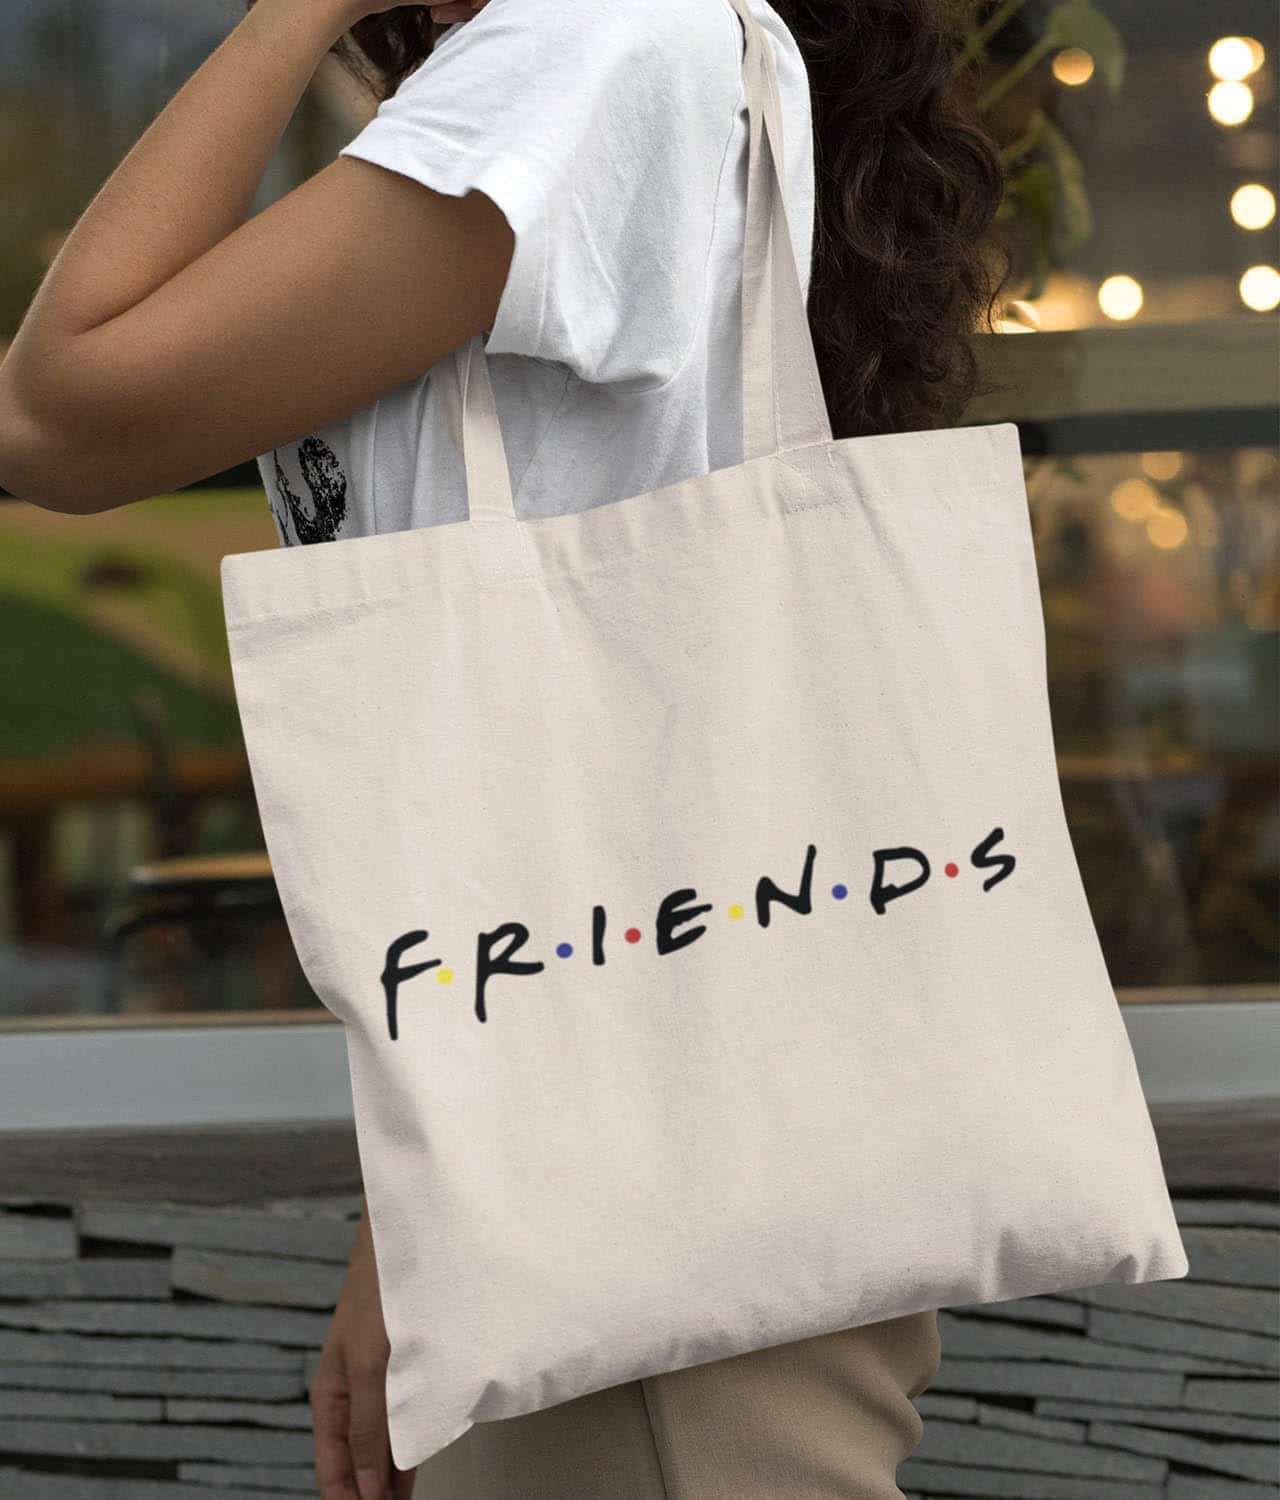 Spreadshirt Friends Logo Tote Bag